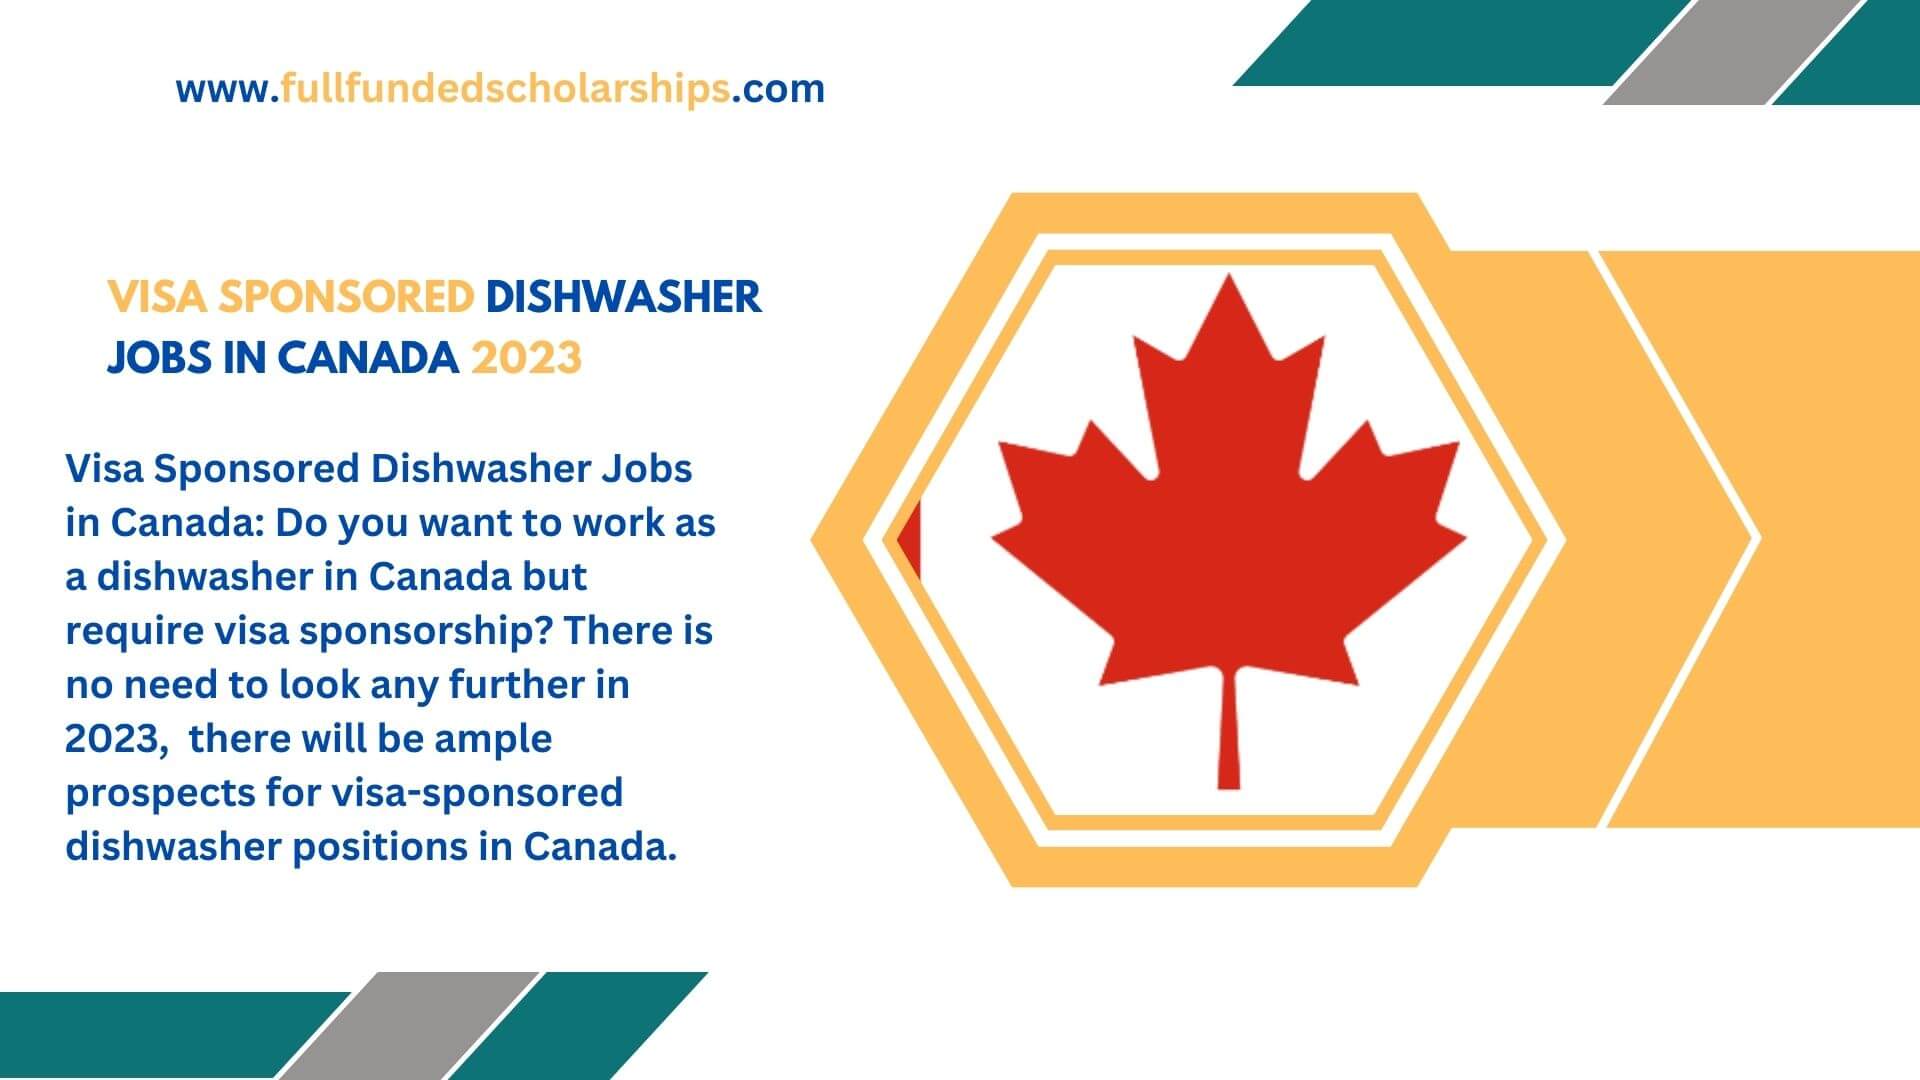 Visa Sponsored Dishwasher Jobs in Canada 2023